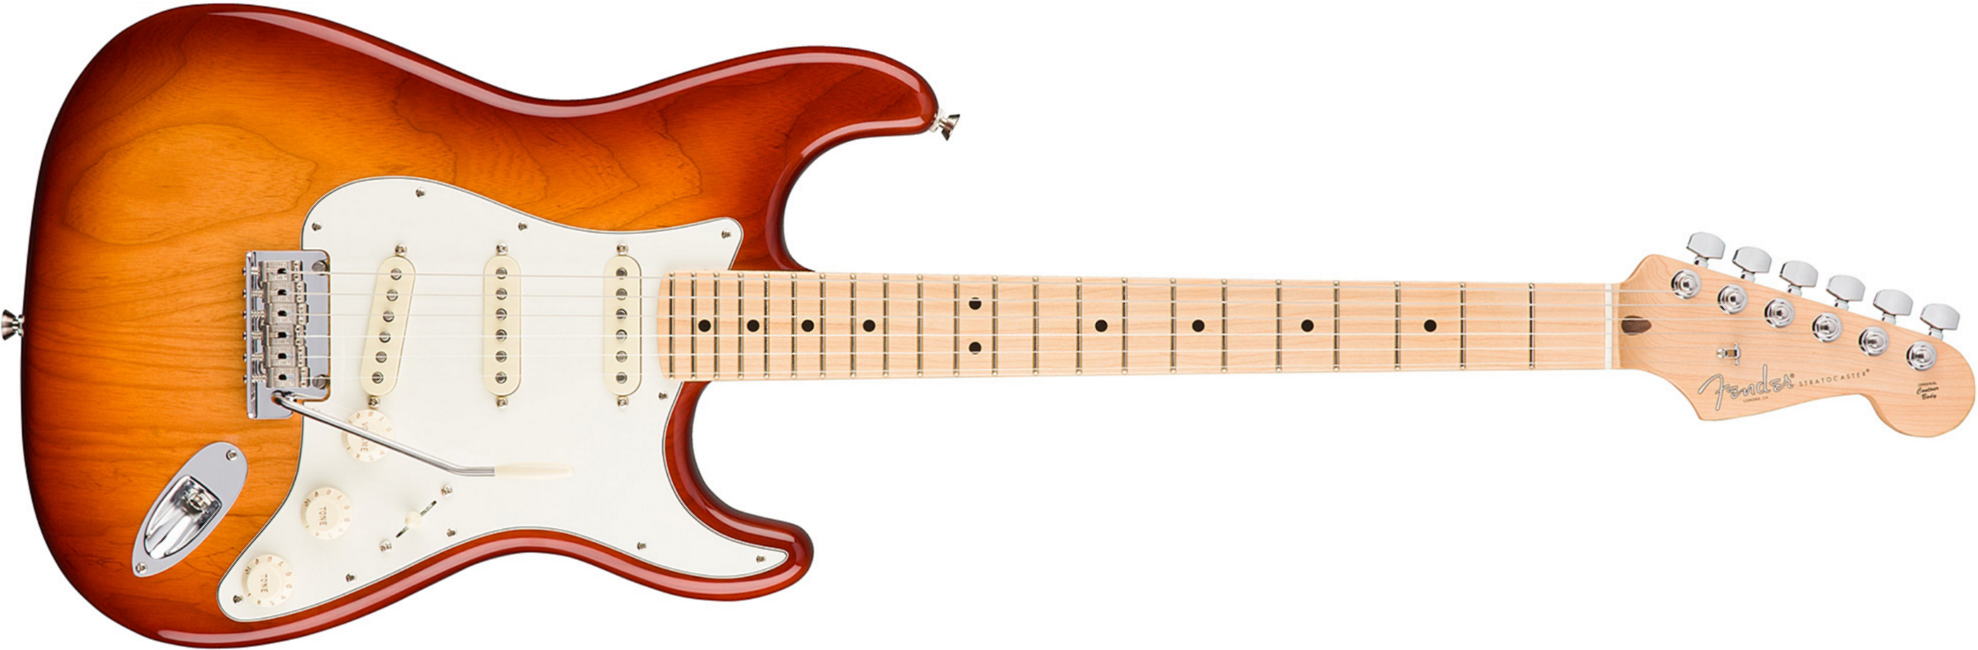 Fender Strat American Professional 2017 3s Usa Mn - Sienna Sunburst - Guitarra eléctrica con forma de str. - Main picture